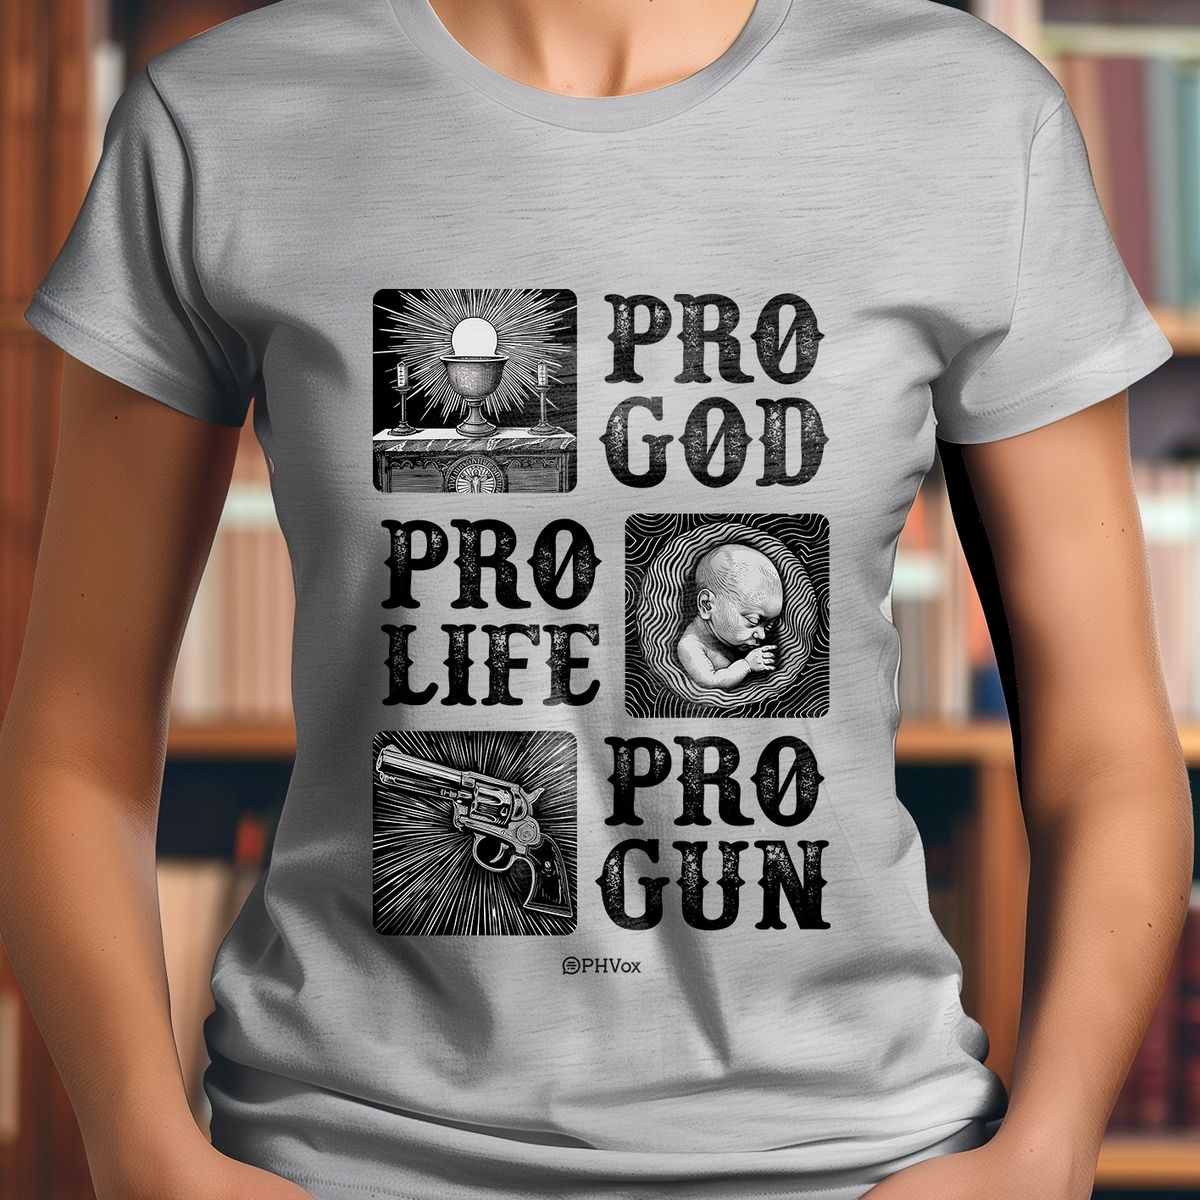 Nome do produto: Pro God, Life, Gun (fem)